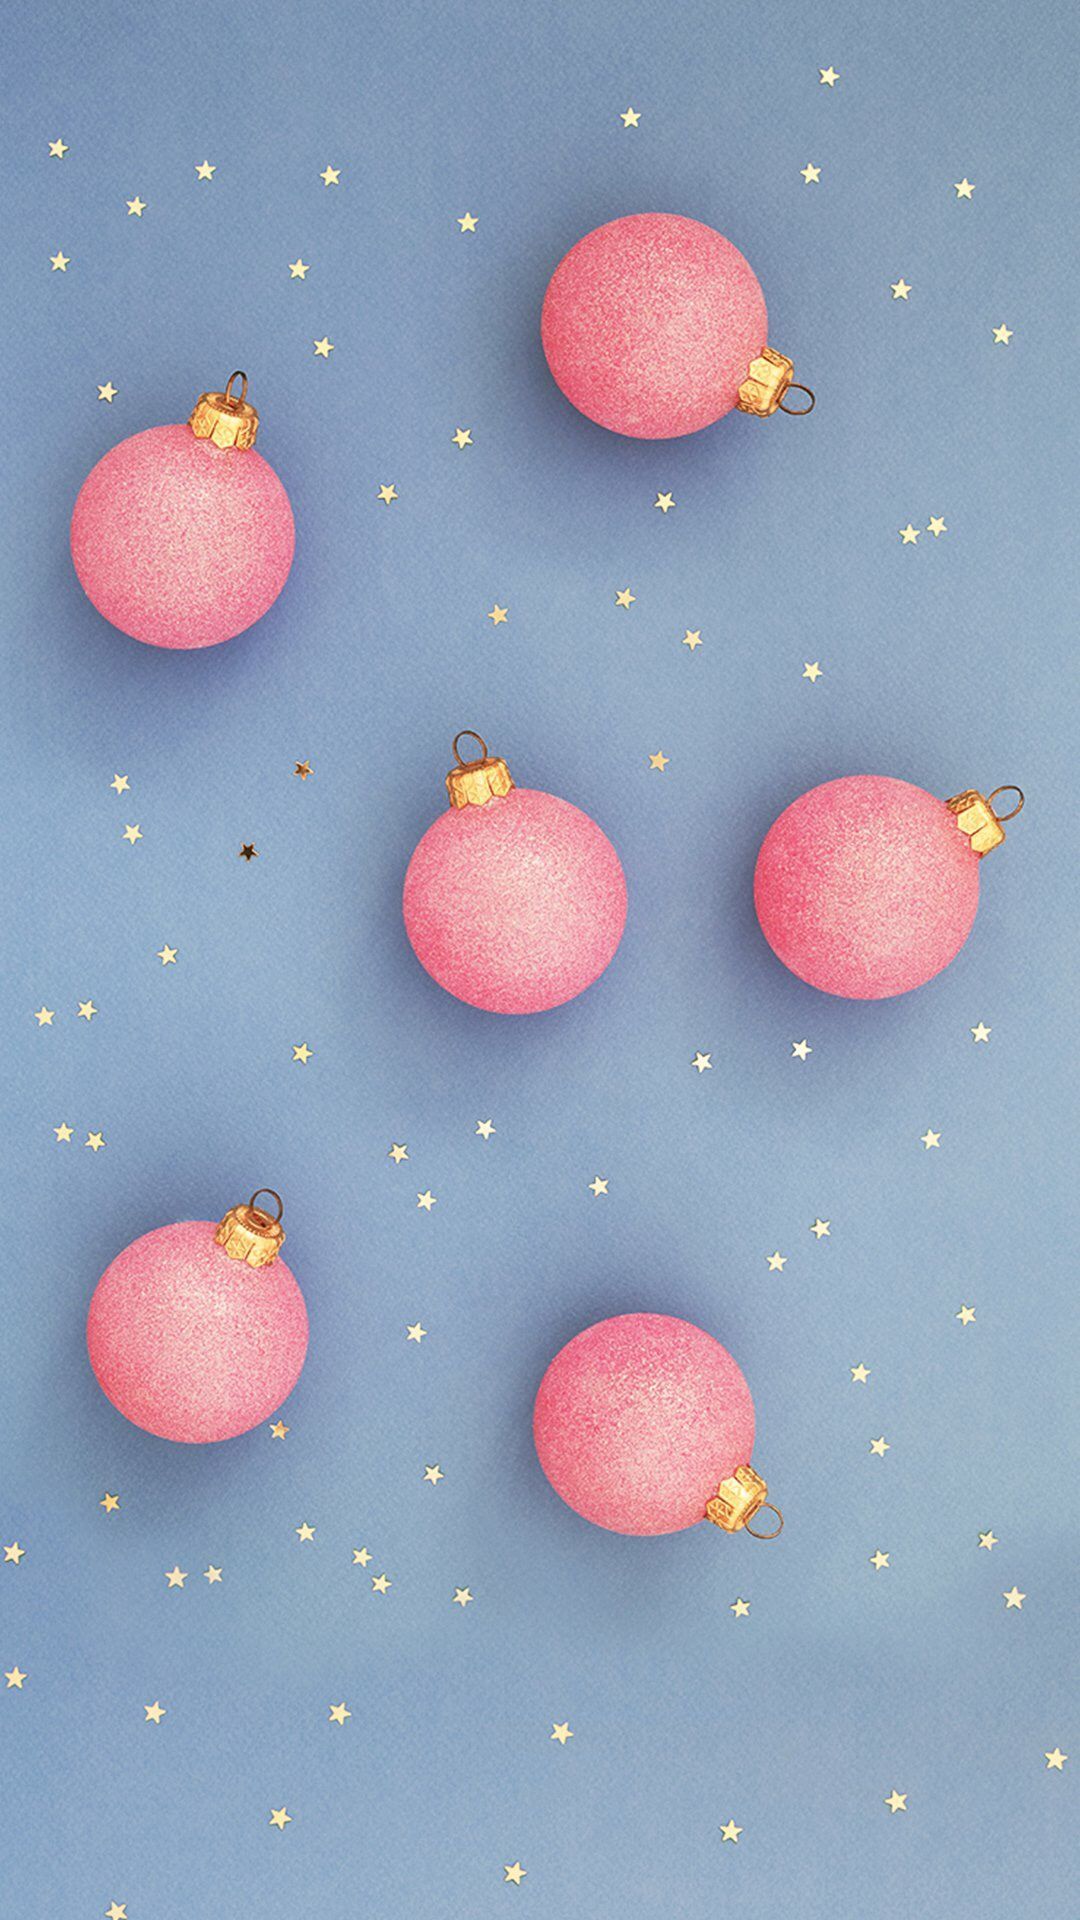 Pink / Lavender / Baby Blue / Ornaments / Wallpaper / Gold Stars. Fondo de pantalla navideño, Fondos de navidad para iphone, Ideas de fondos de pantalla